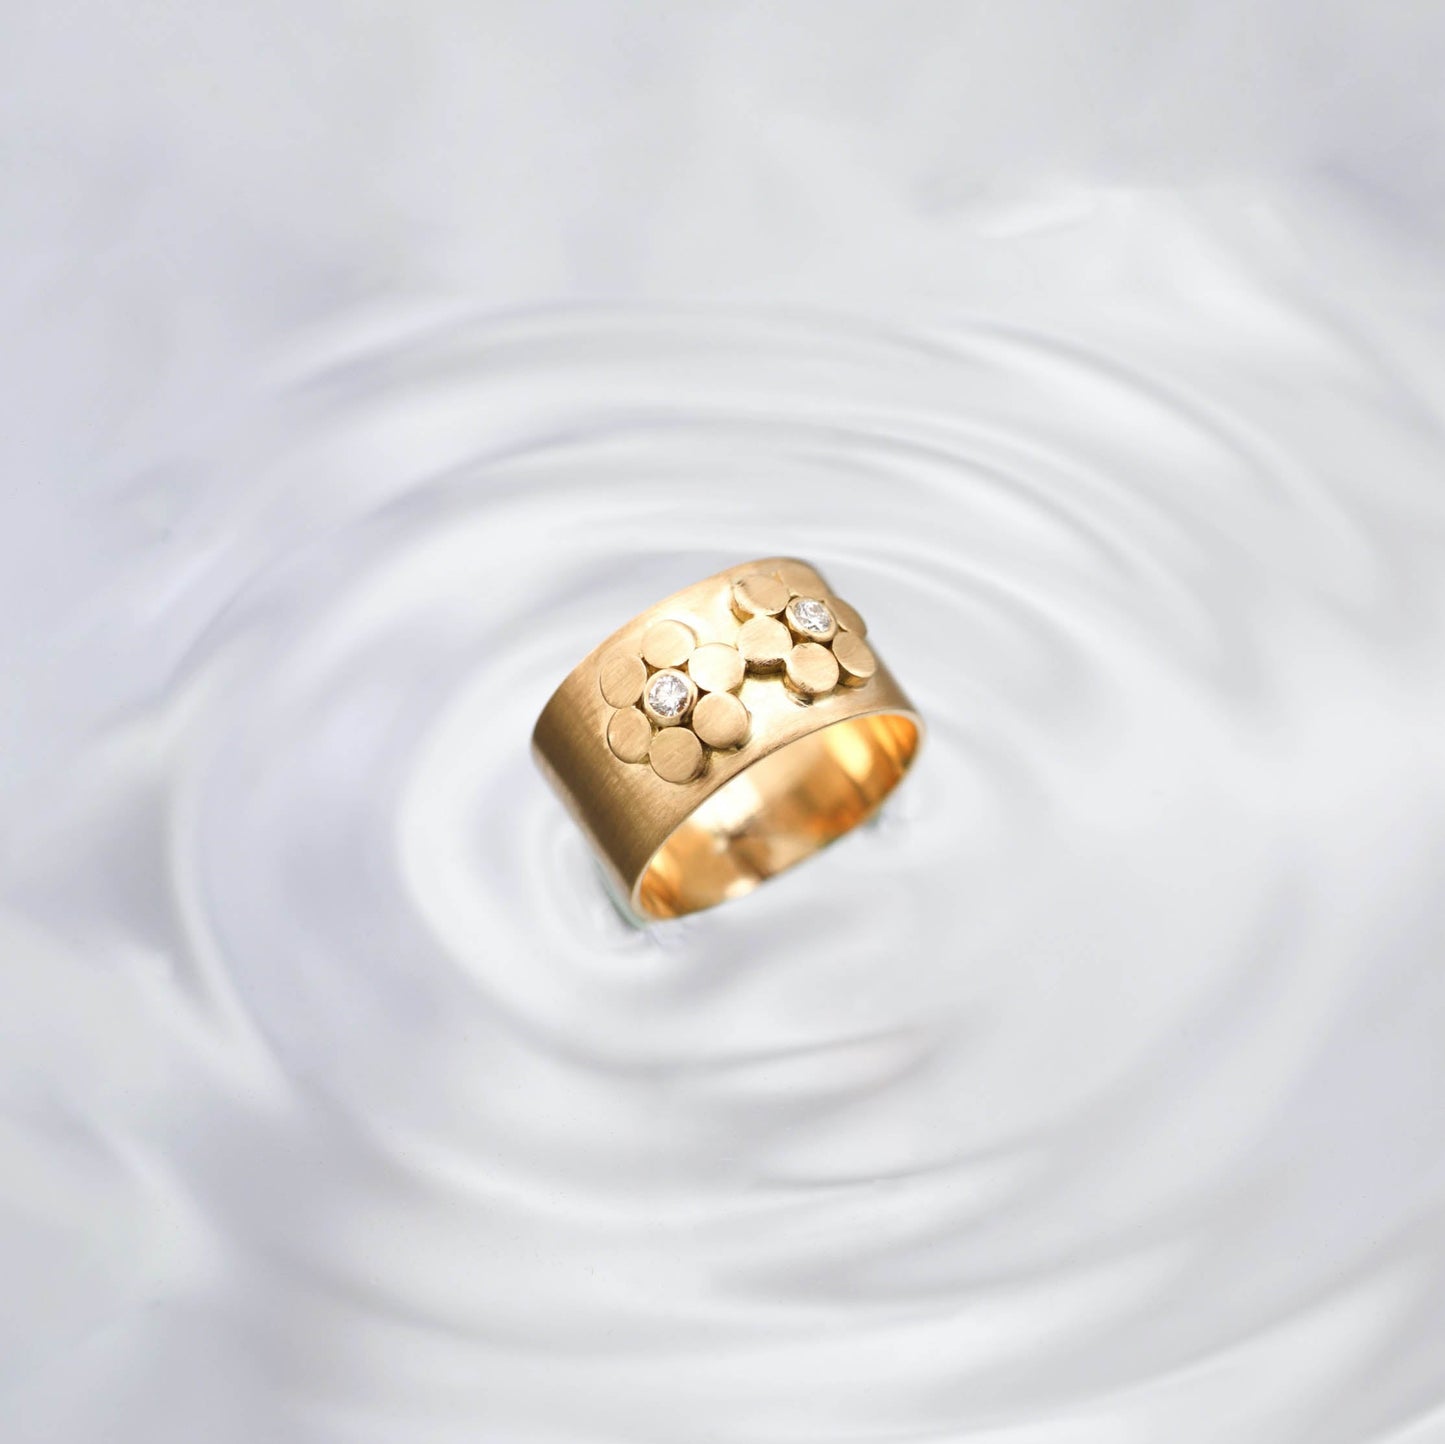 The Drishti Primulus Series Gold and Diamond Ring by Rasvihar